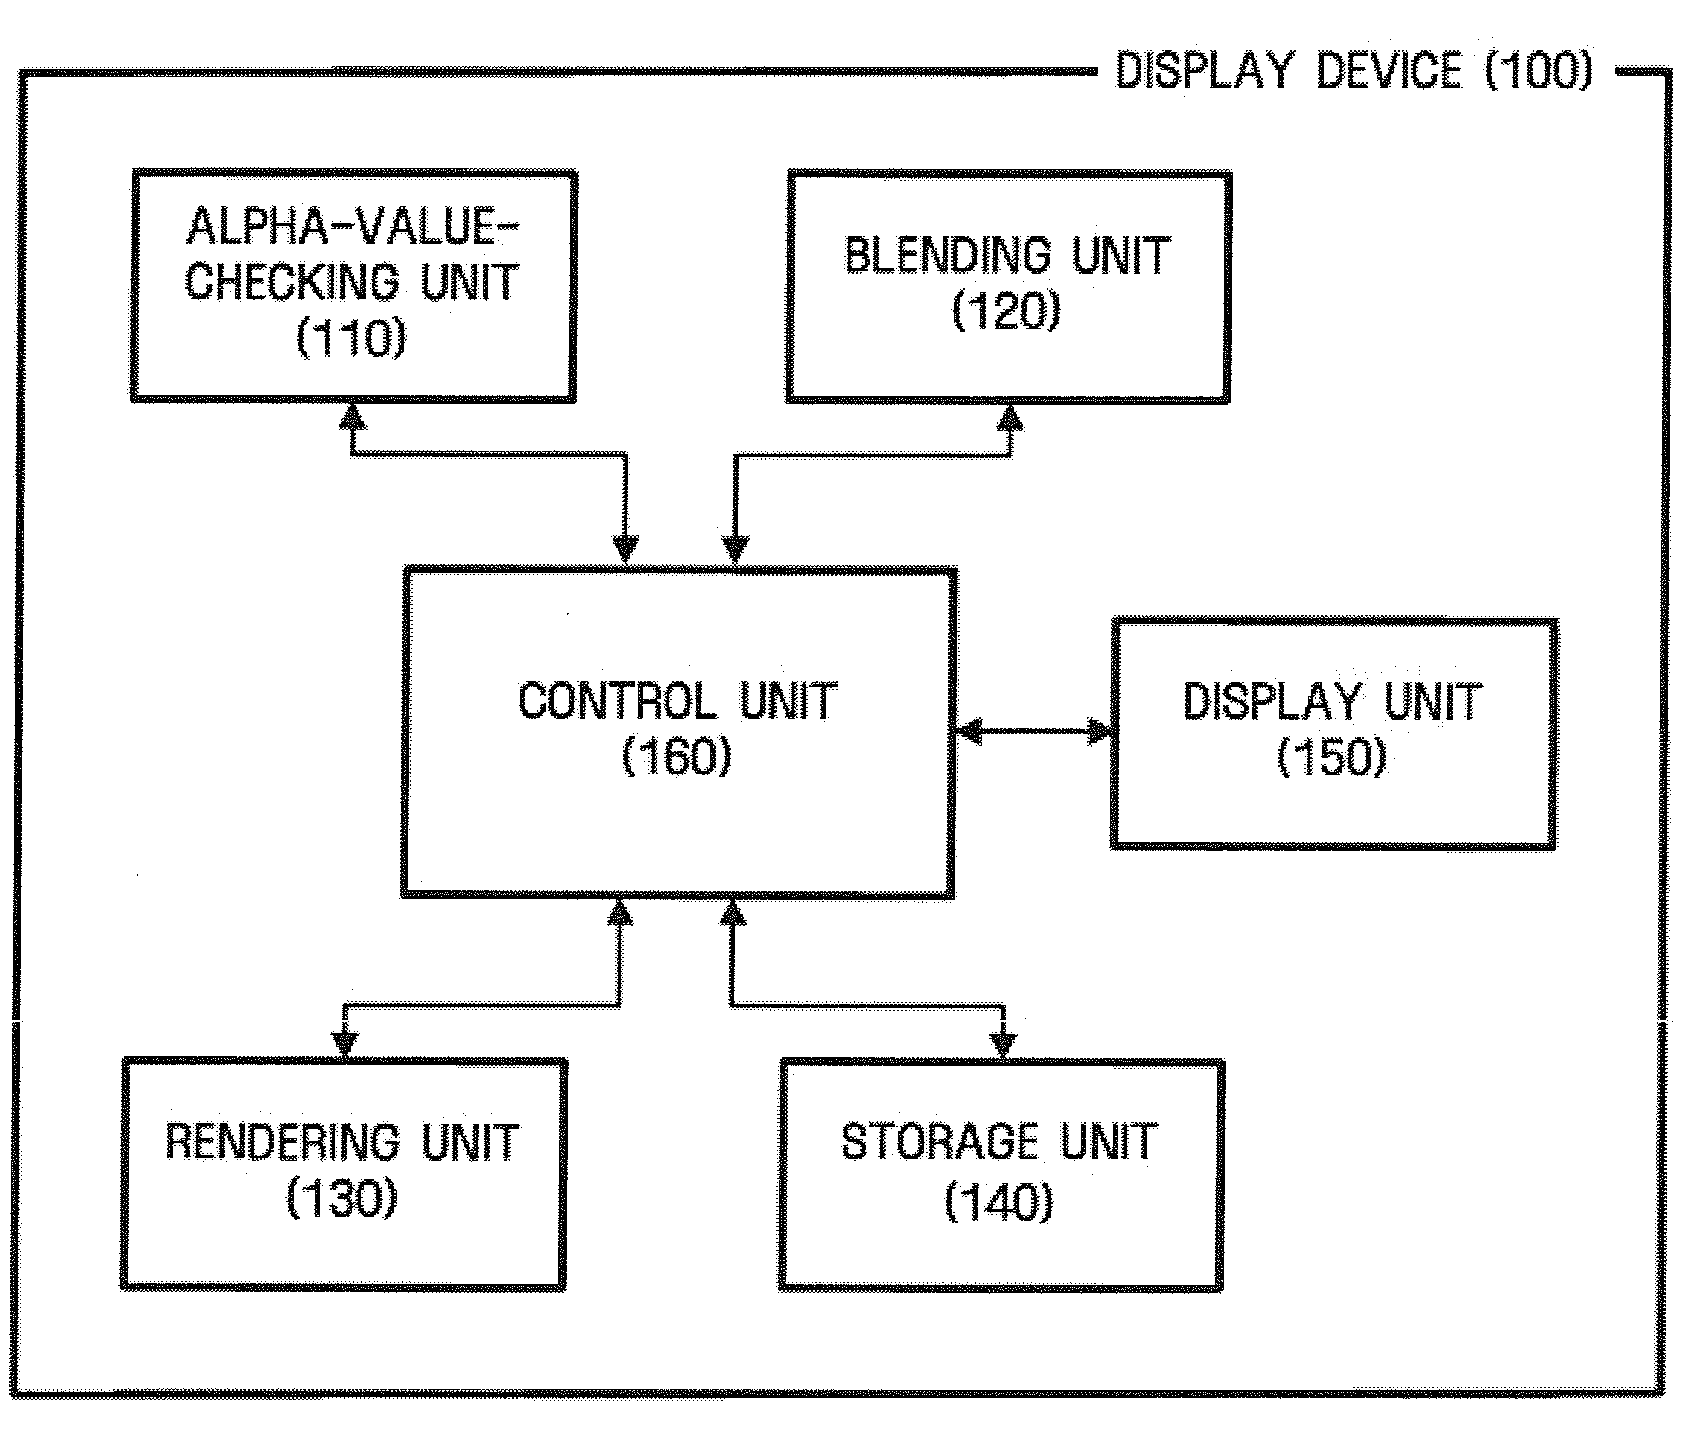 Apparatus and method of displaying overlaid image